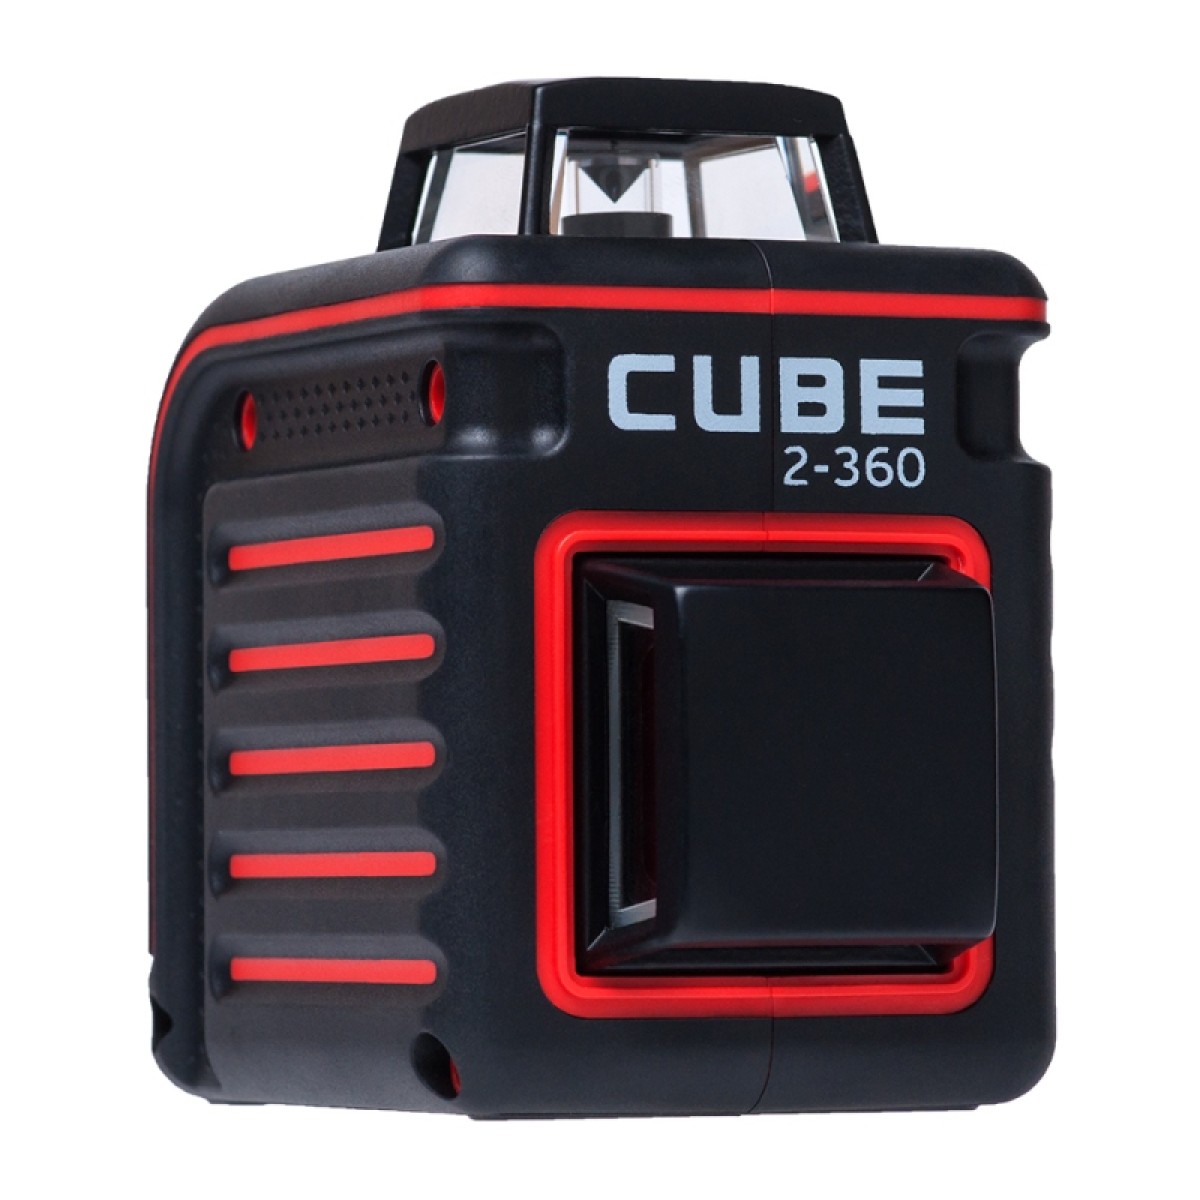 Ada cube 360 ultimate edition. Лазерный уровень ada Cube 360. Лазерный уровень ada Cube 2-360. Ada instruments Cube 2-360 Basic Edition. Ada Cube 2-360 professional Edition а00449.